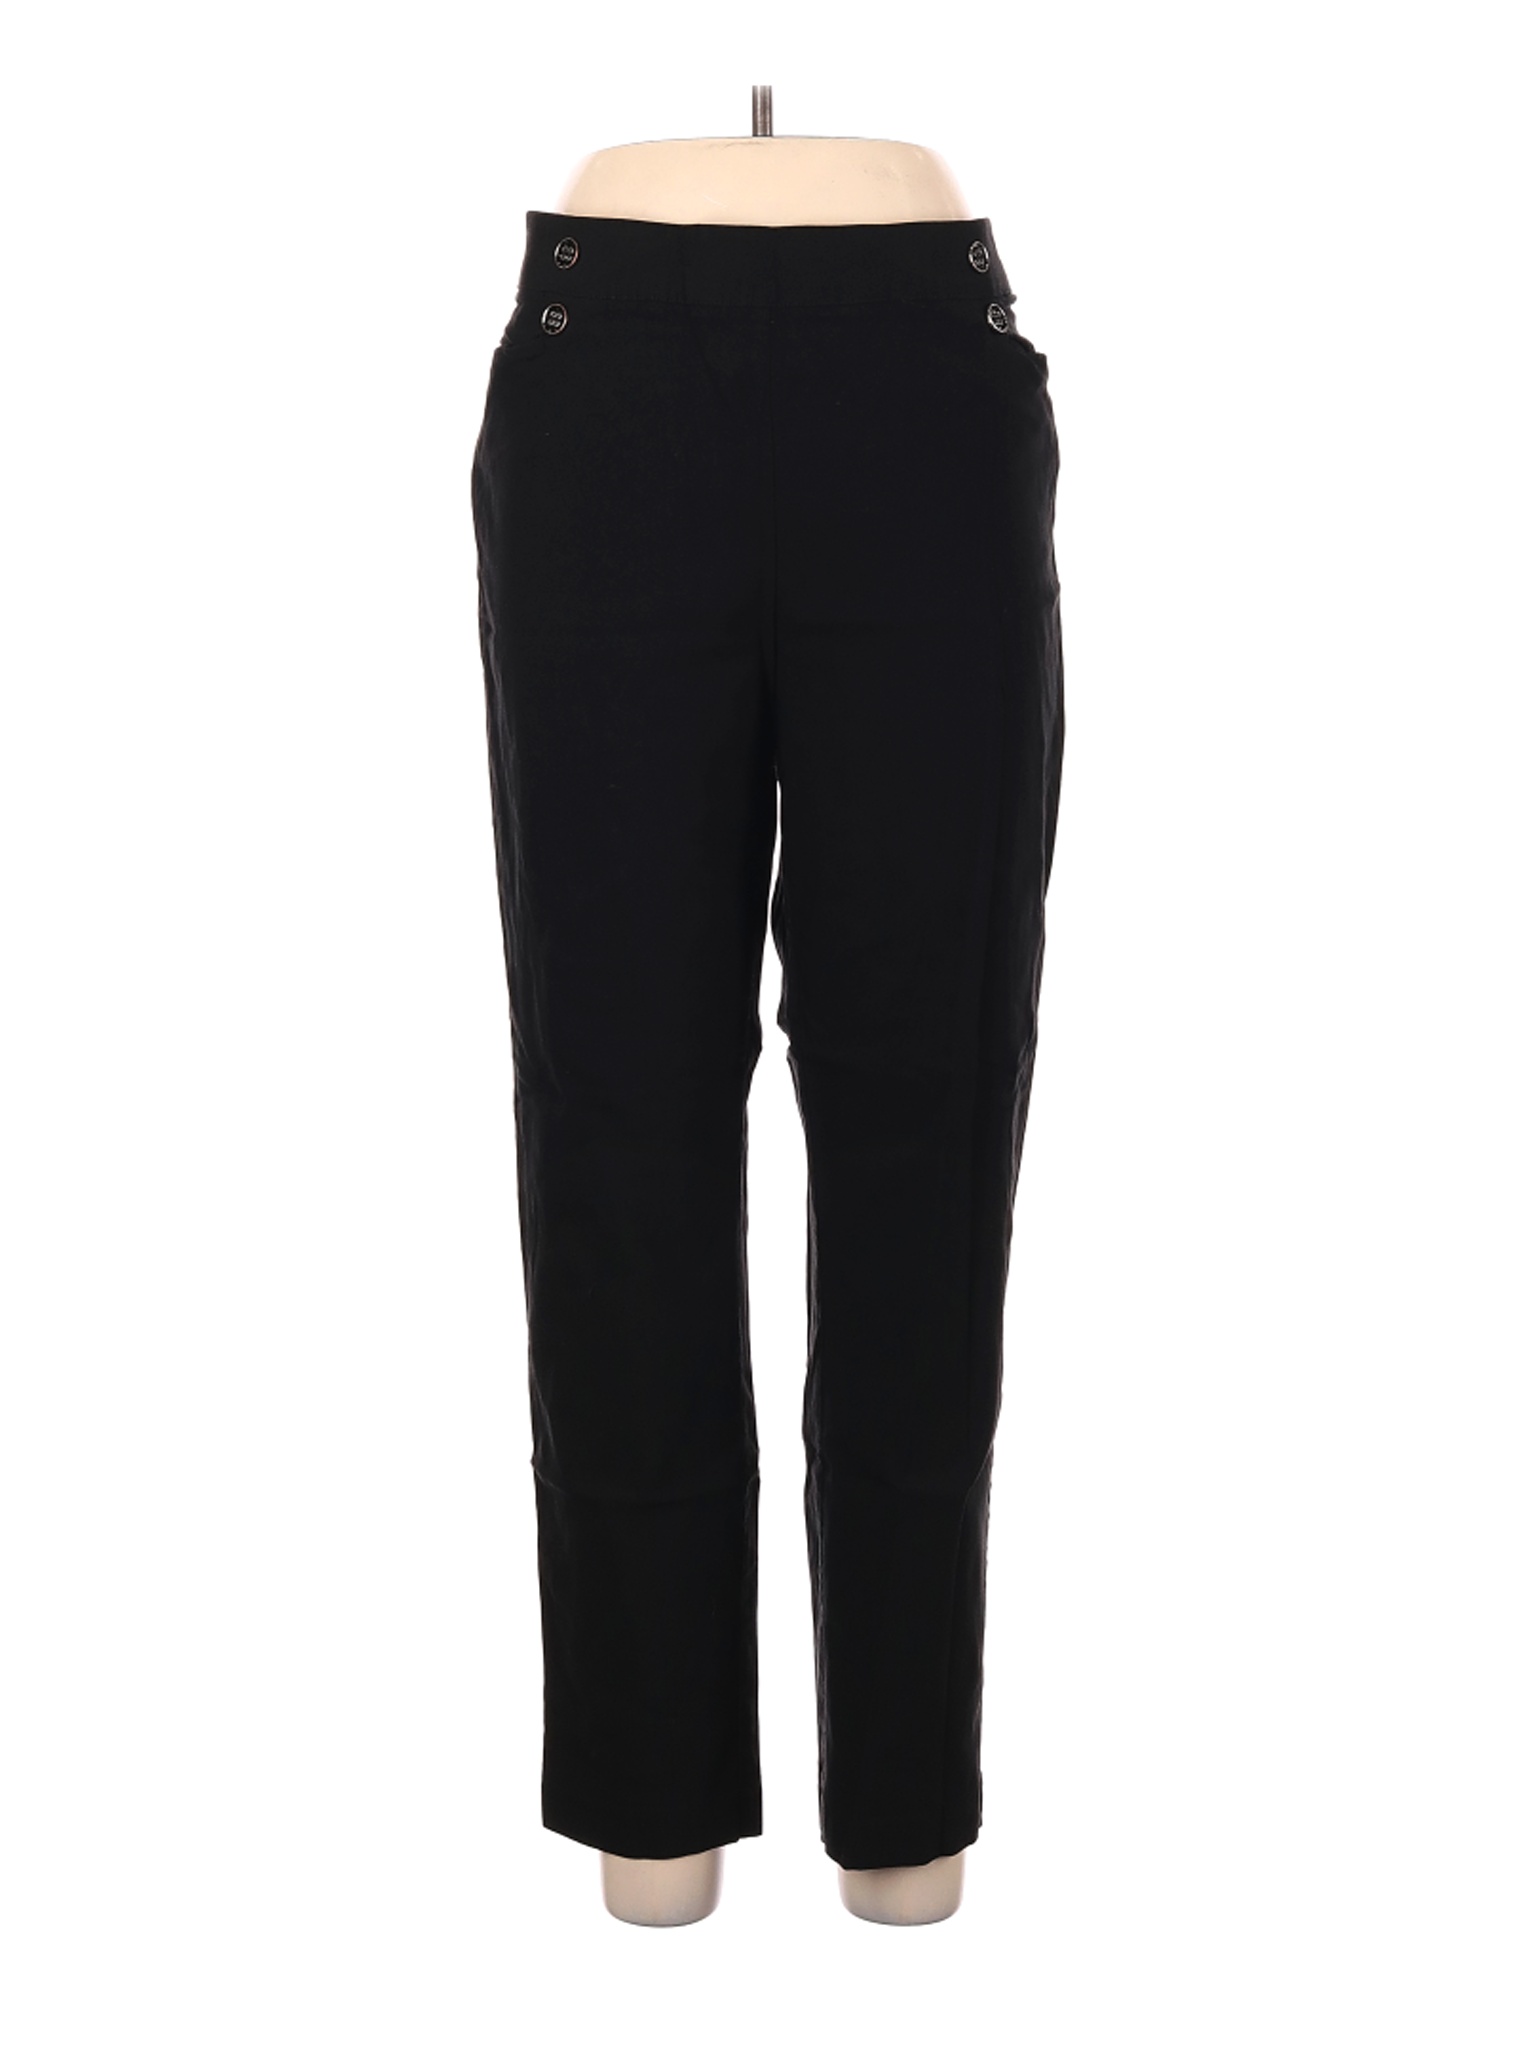 Retrology Women Black Casual Pants XL | eBay